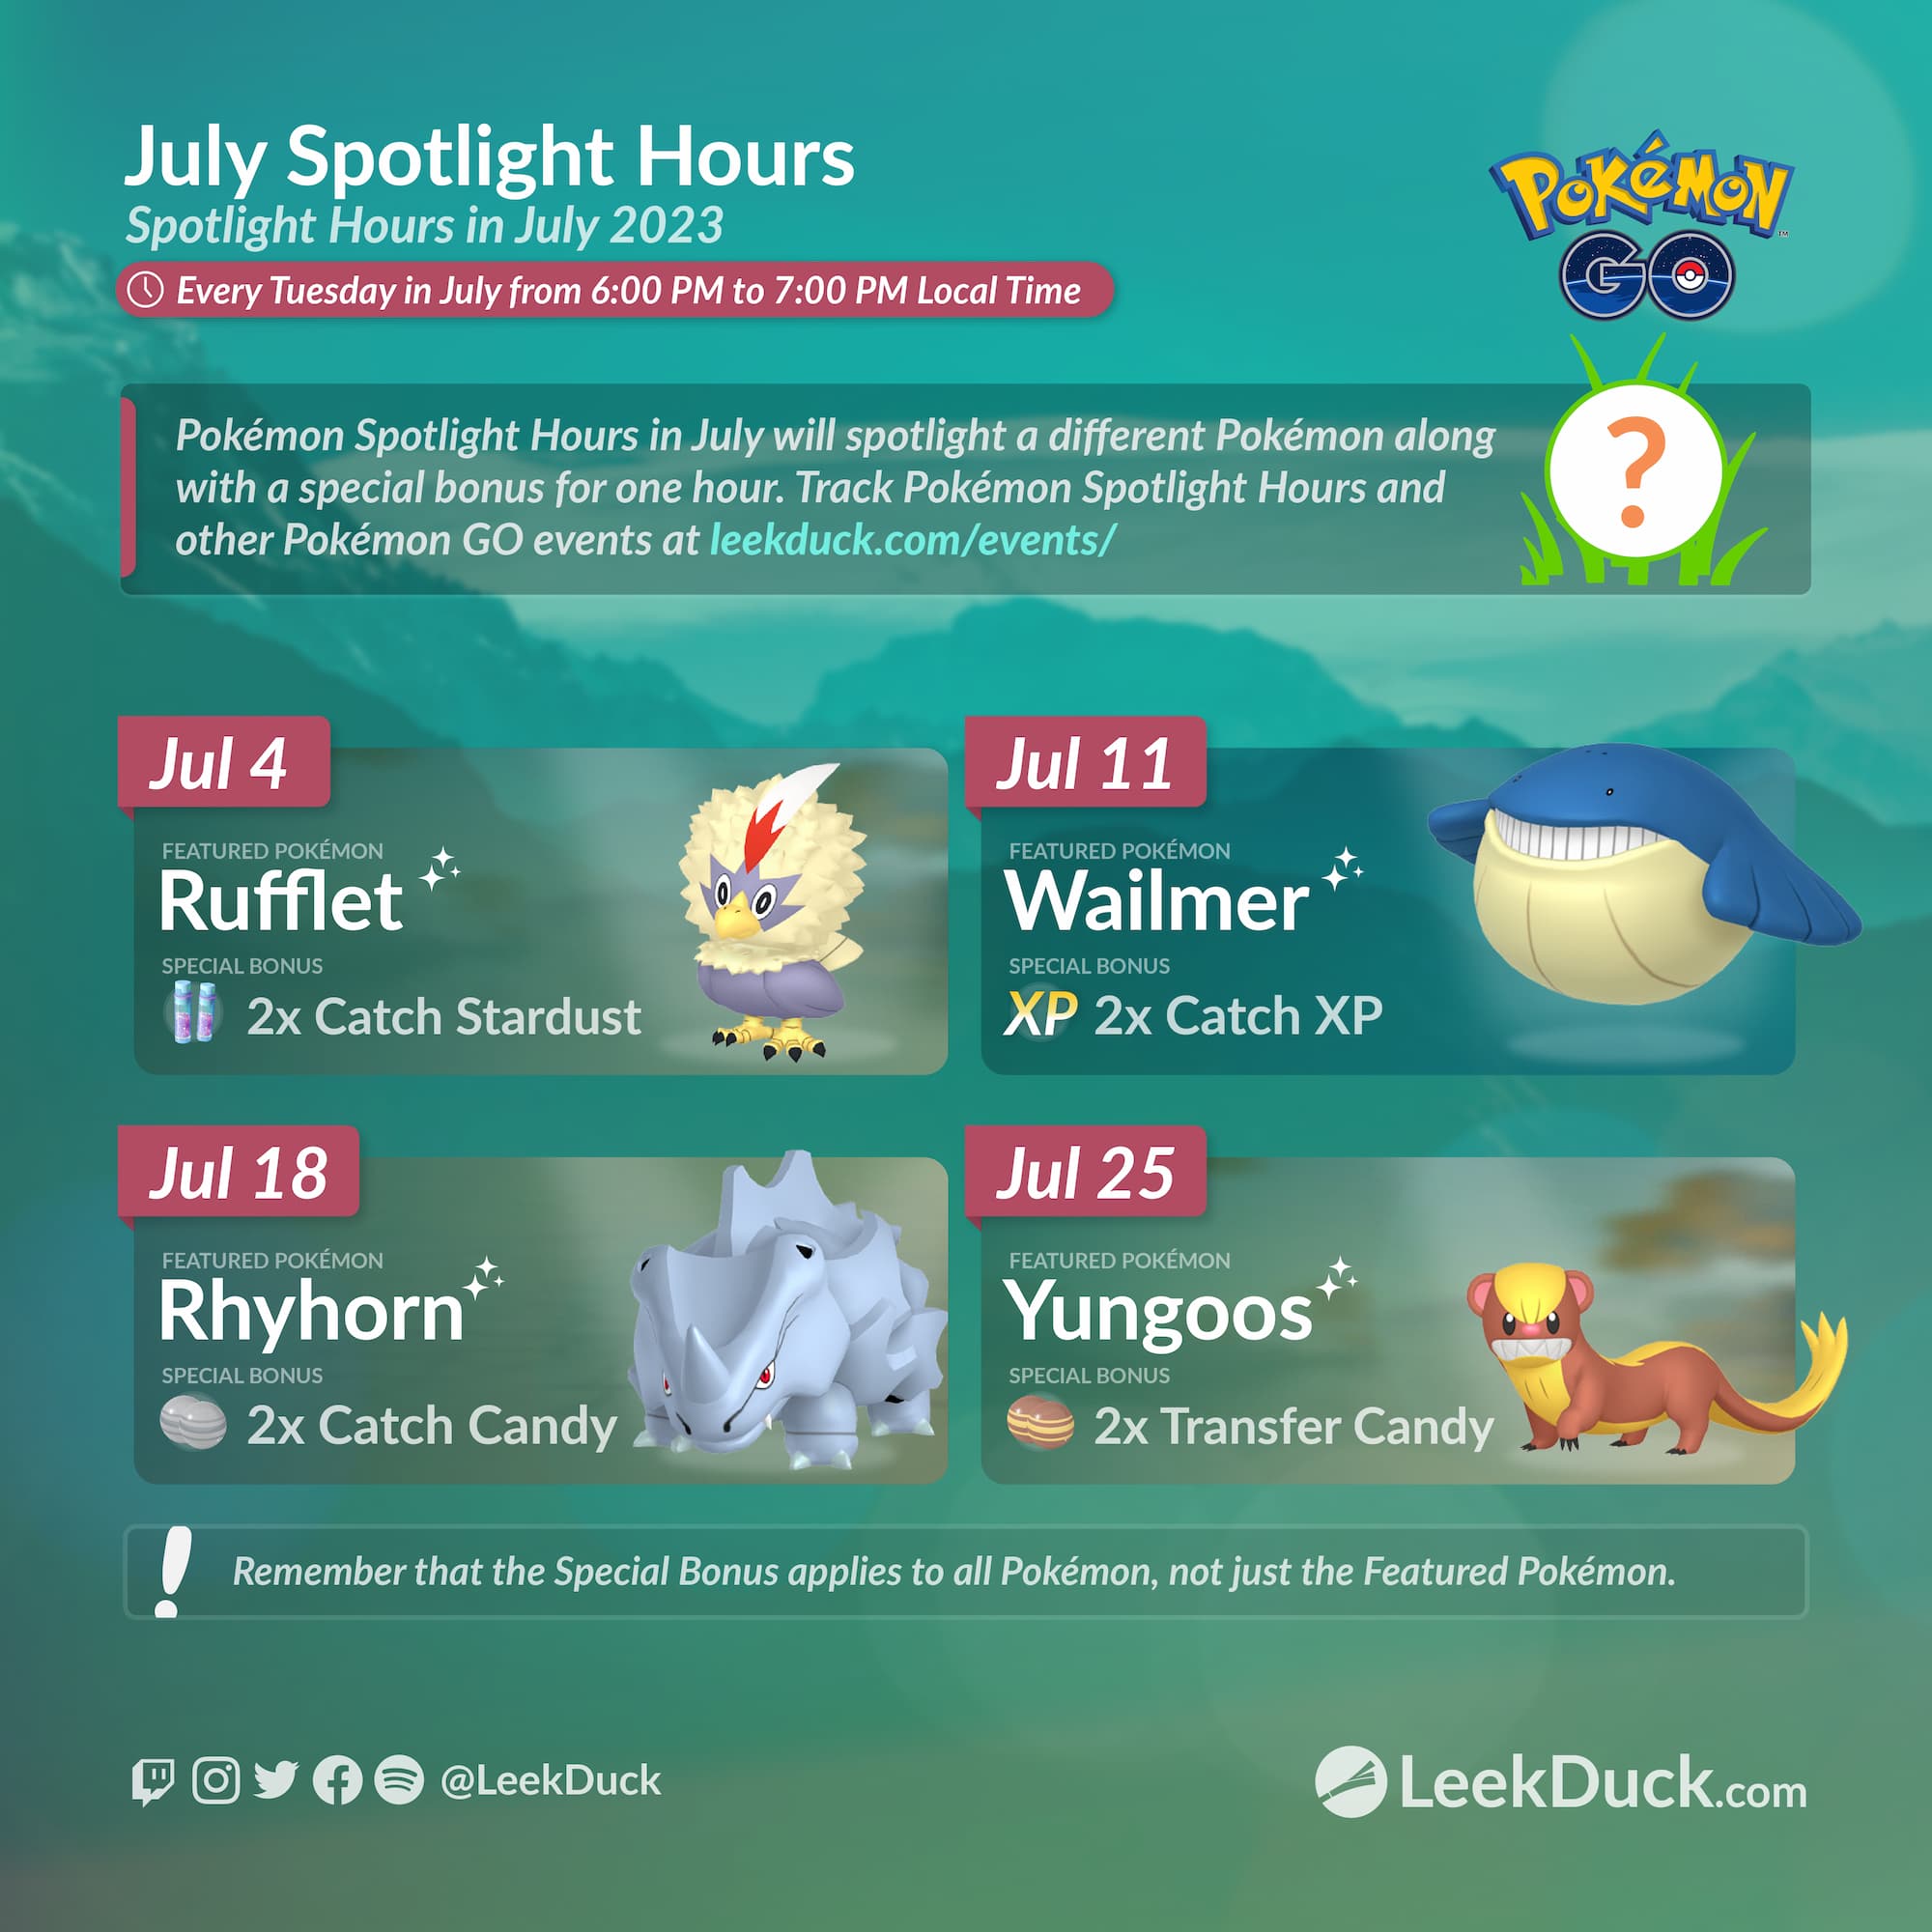 Tonight Is Shellder Spotlight Hour In Pokémon GO: April 2023